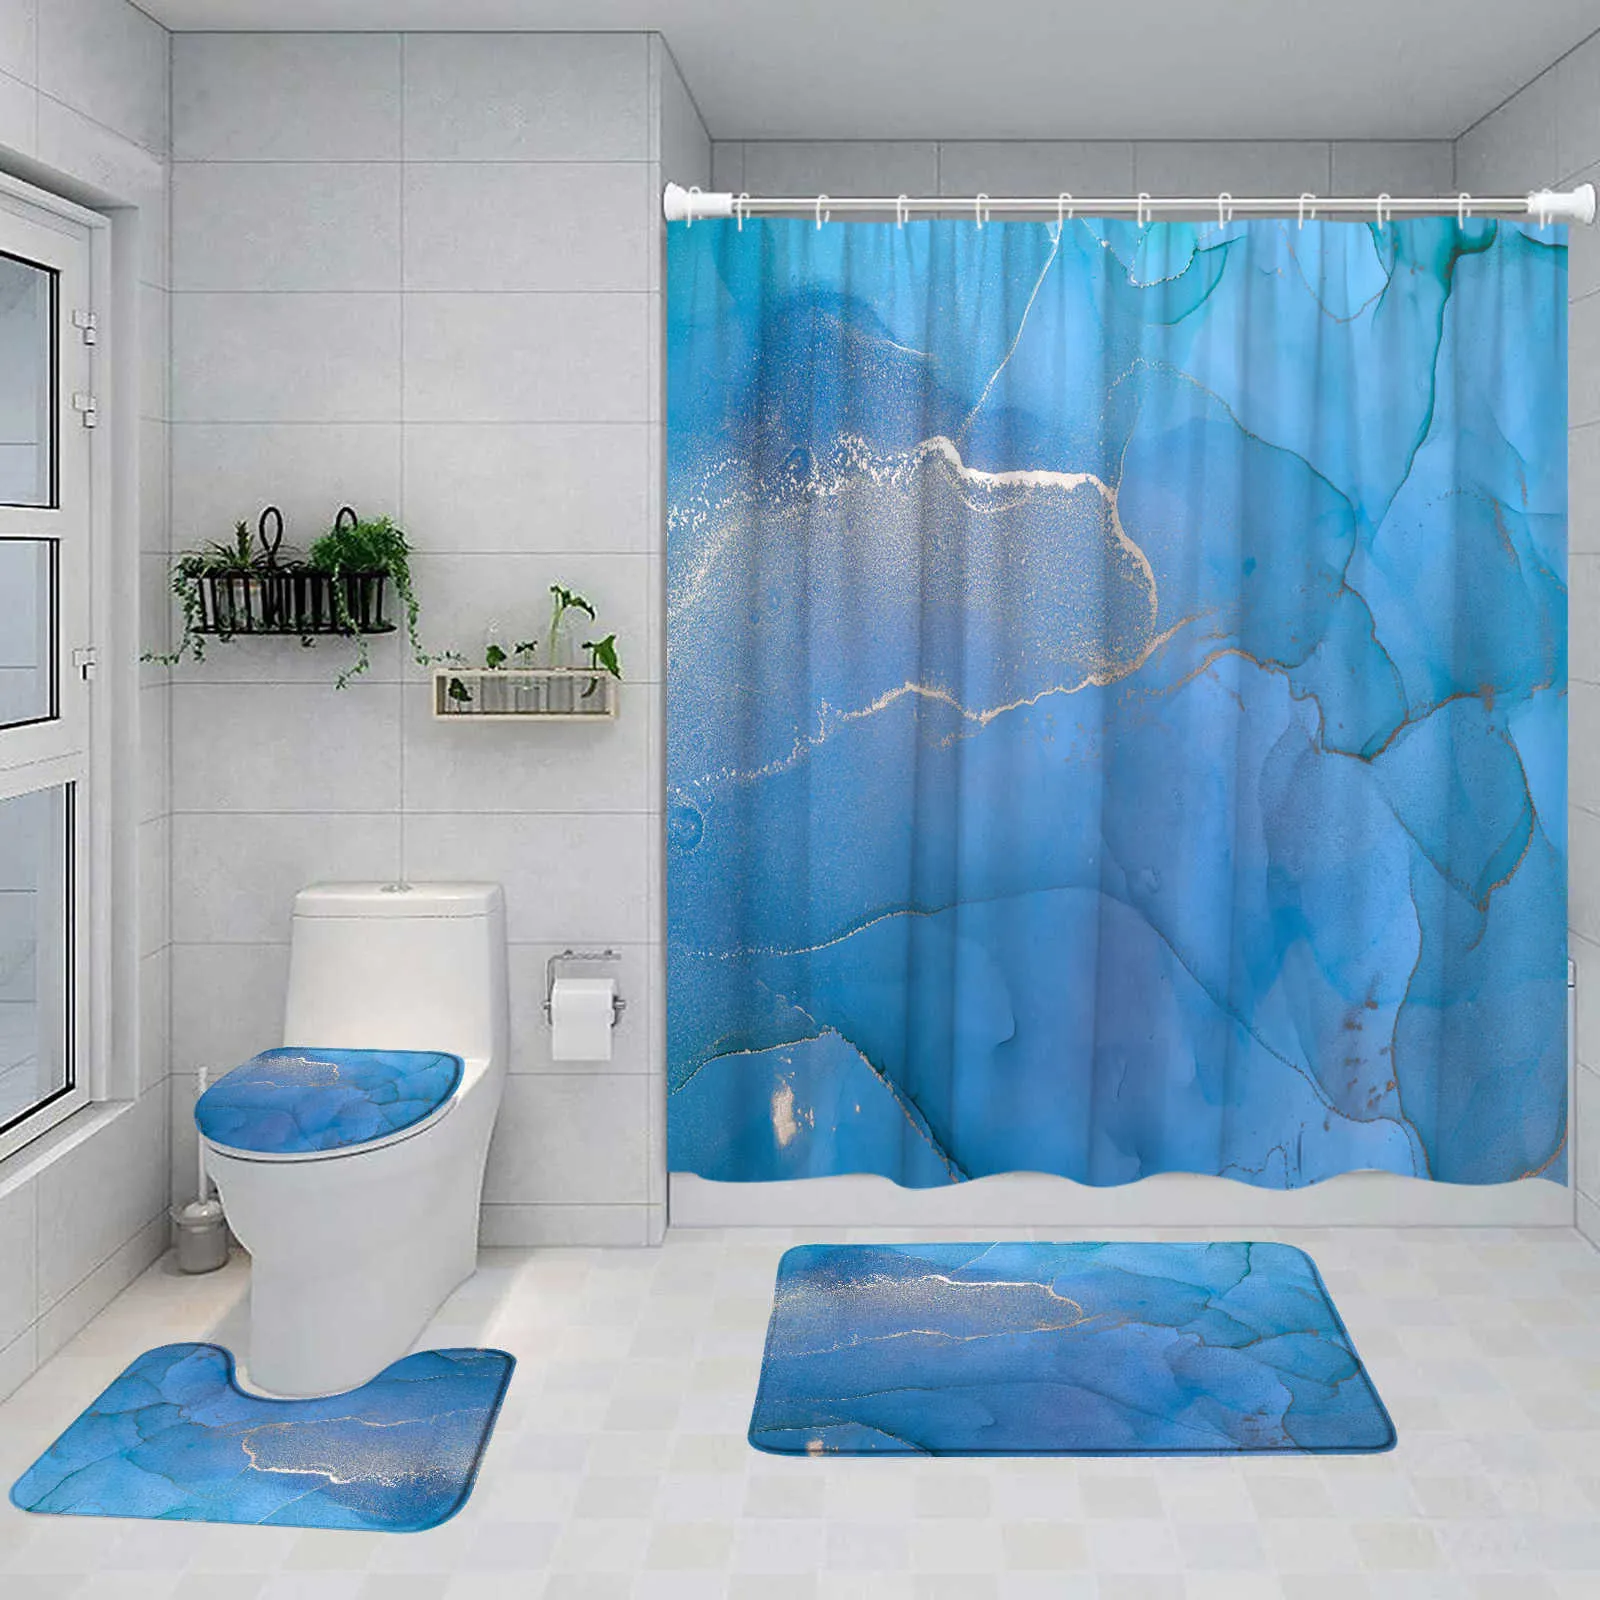 Shower Blue Marble Shower Curtain Set Art Abstract Painted Modern Bathroom Decor Bath Mat Pedestal Rug Non-Slip Carpet Toilet Lid Cover